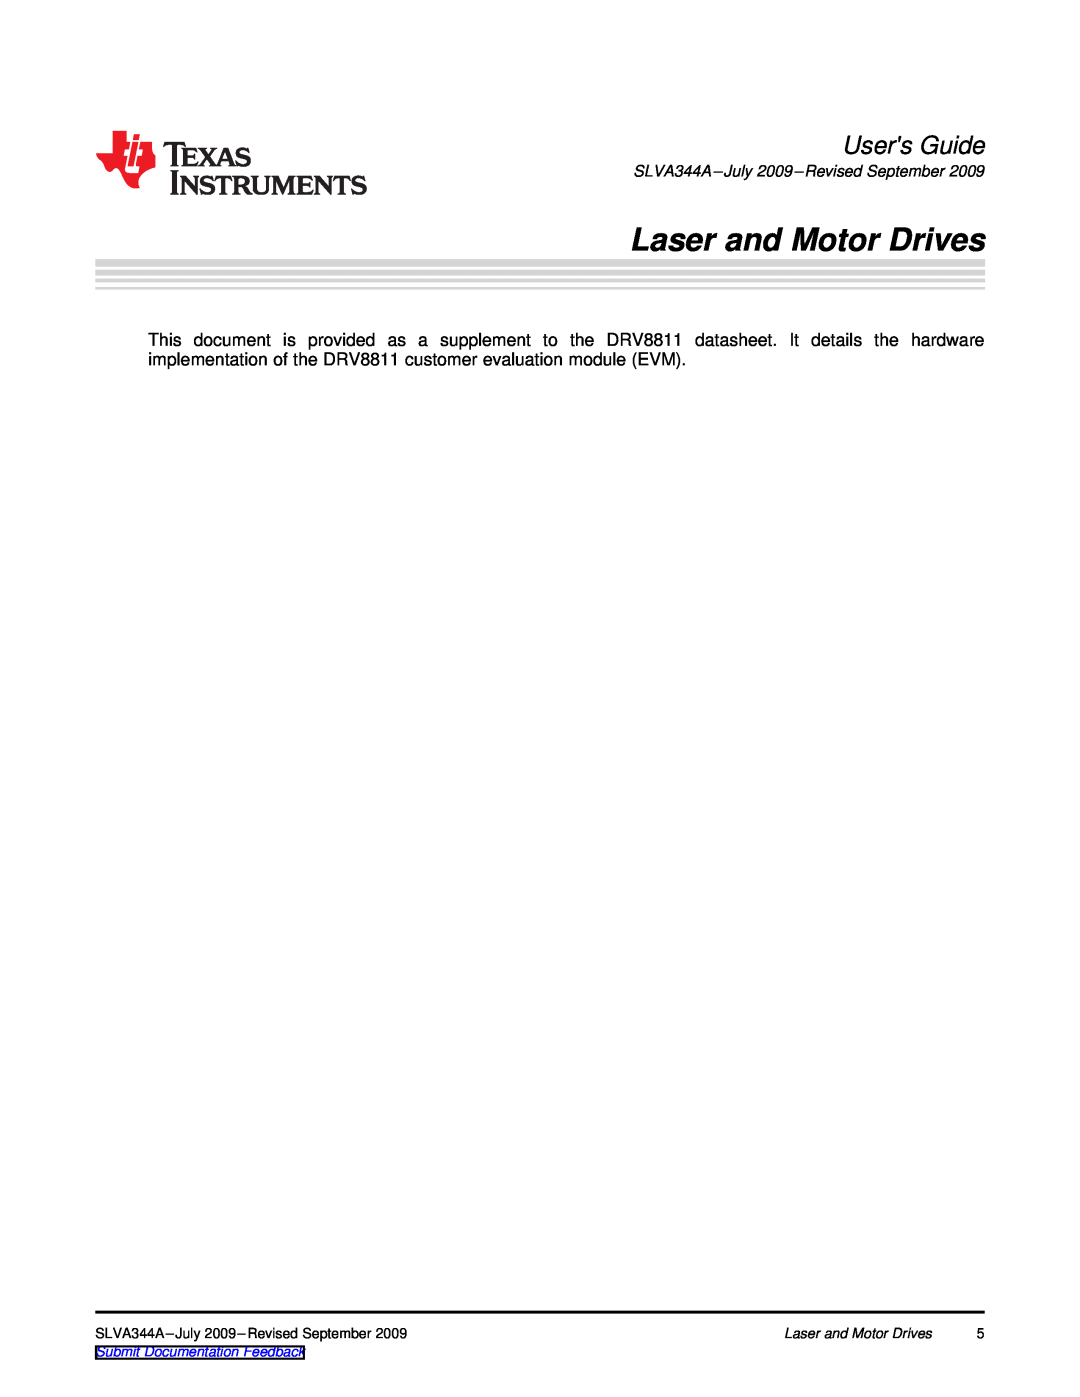 Texas Instruments DRV8811EVM manual Laser and Motor Drives, Users Guide, SLVA344A-July 2009-Revised September 